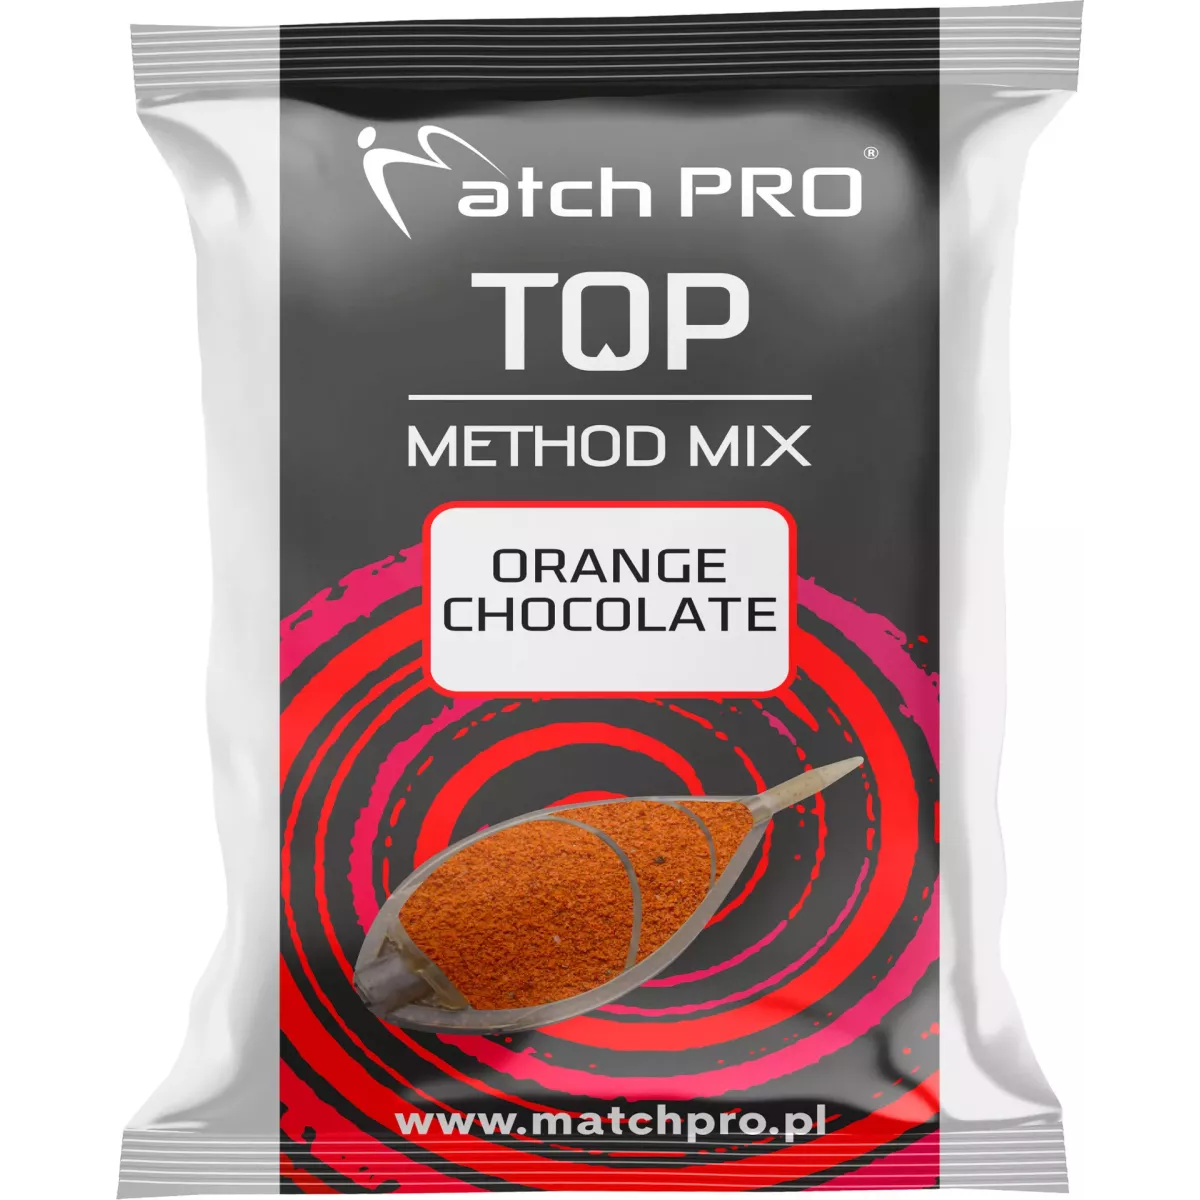 Zanęta MatchPro Method Mix TOP 700g - ORANGE CHOCOLATE